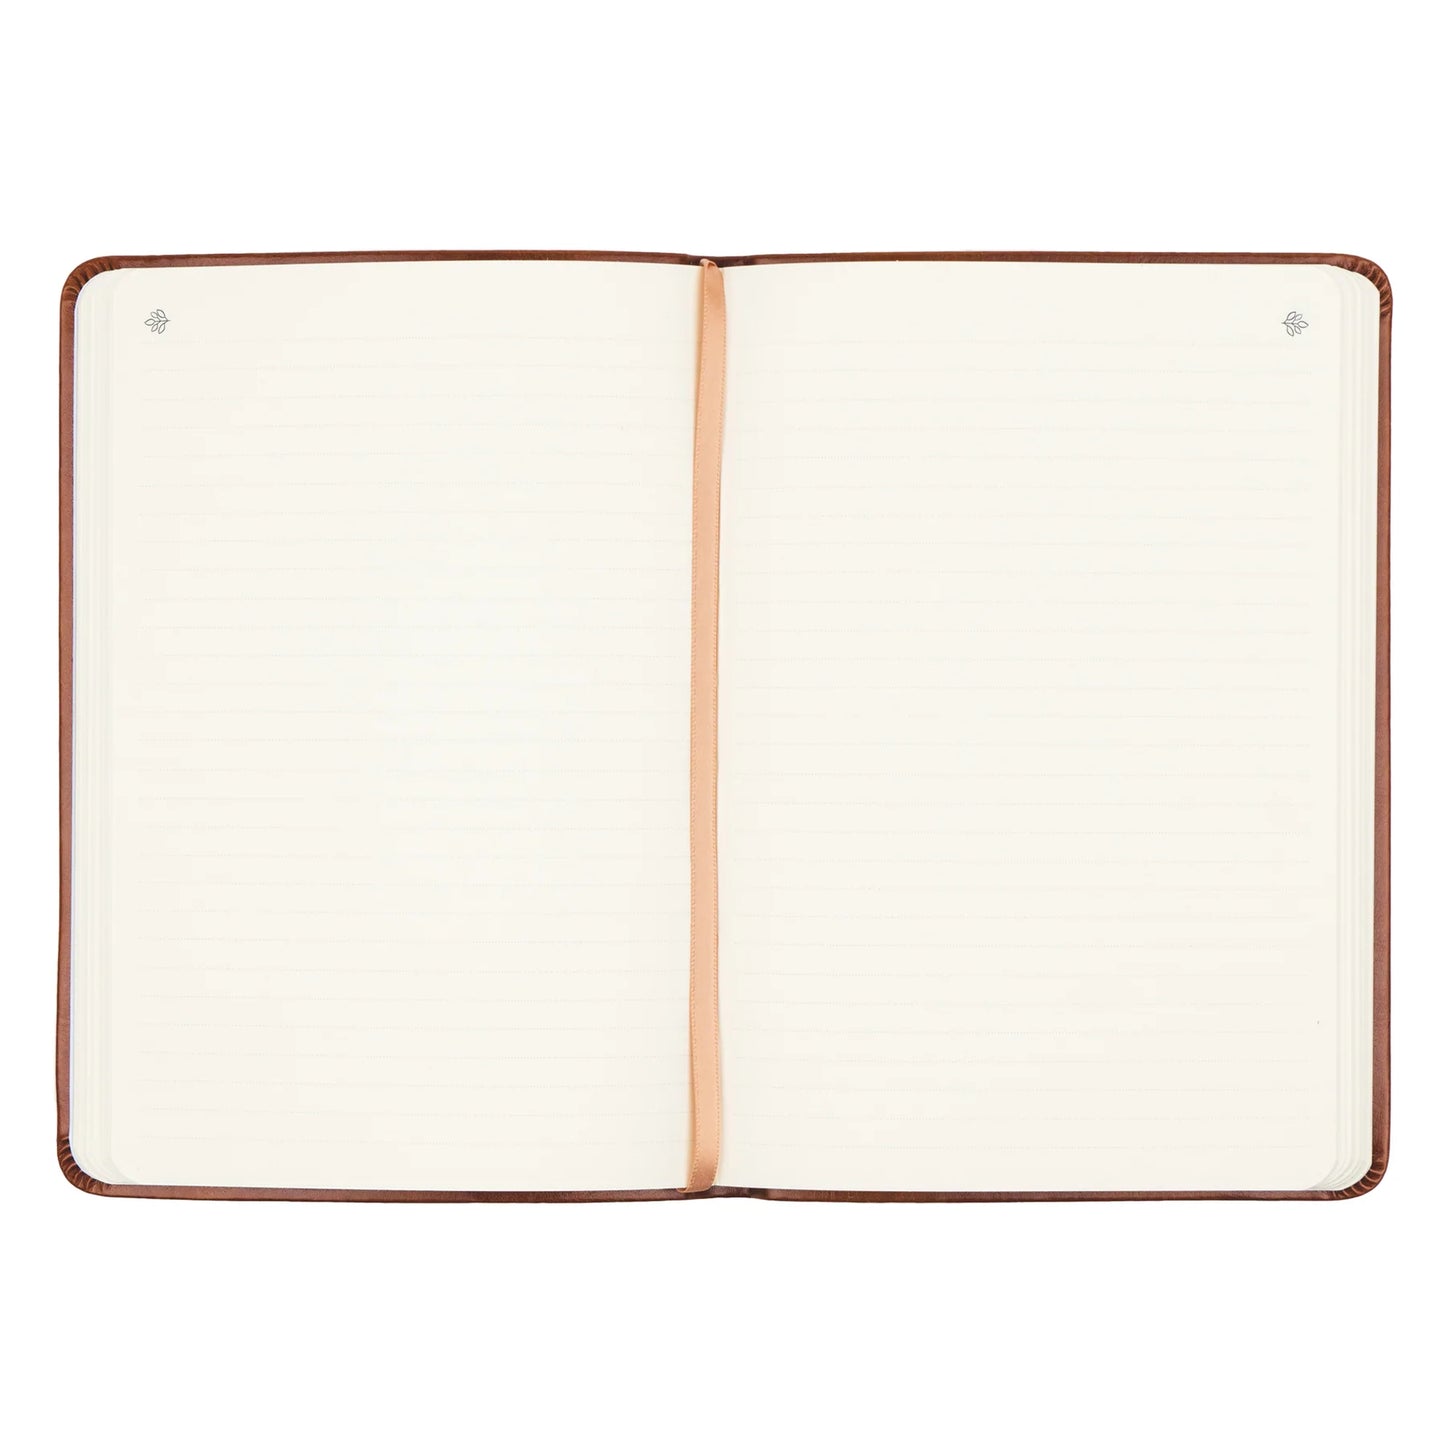 Hosanna Revival Notebook: Sierra, Lined